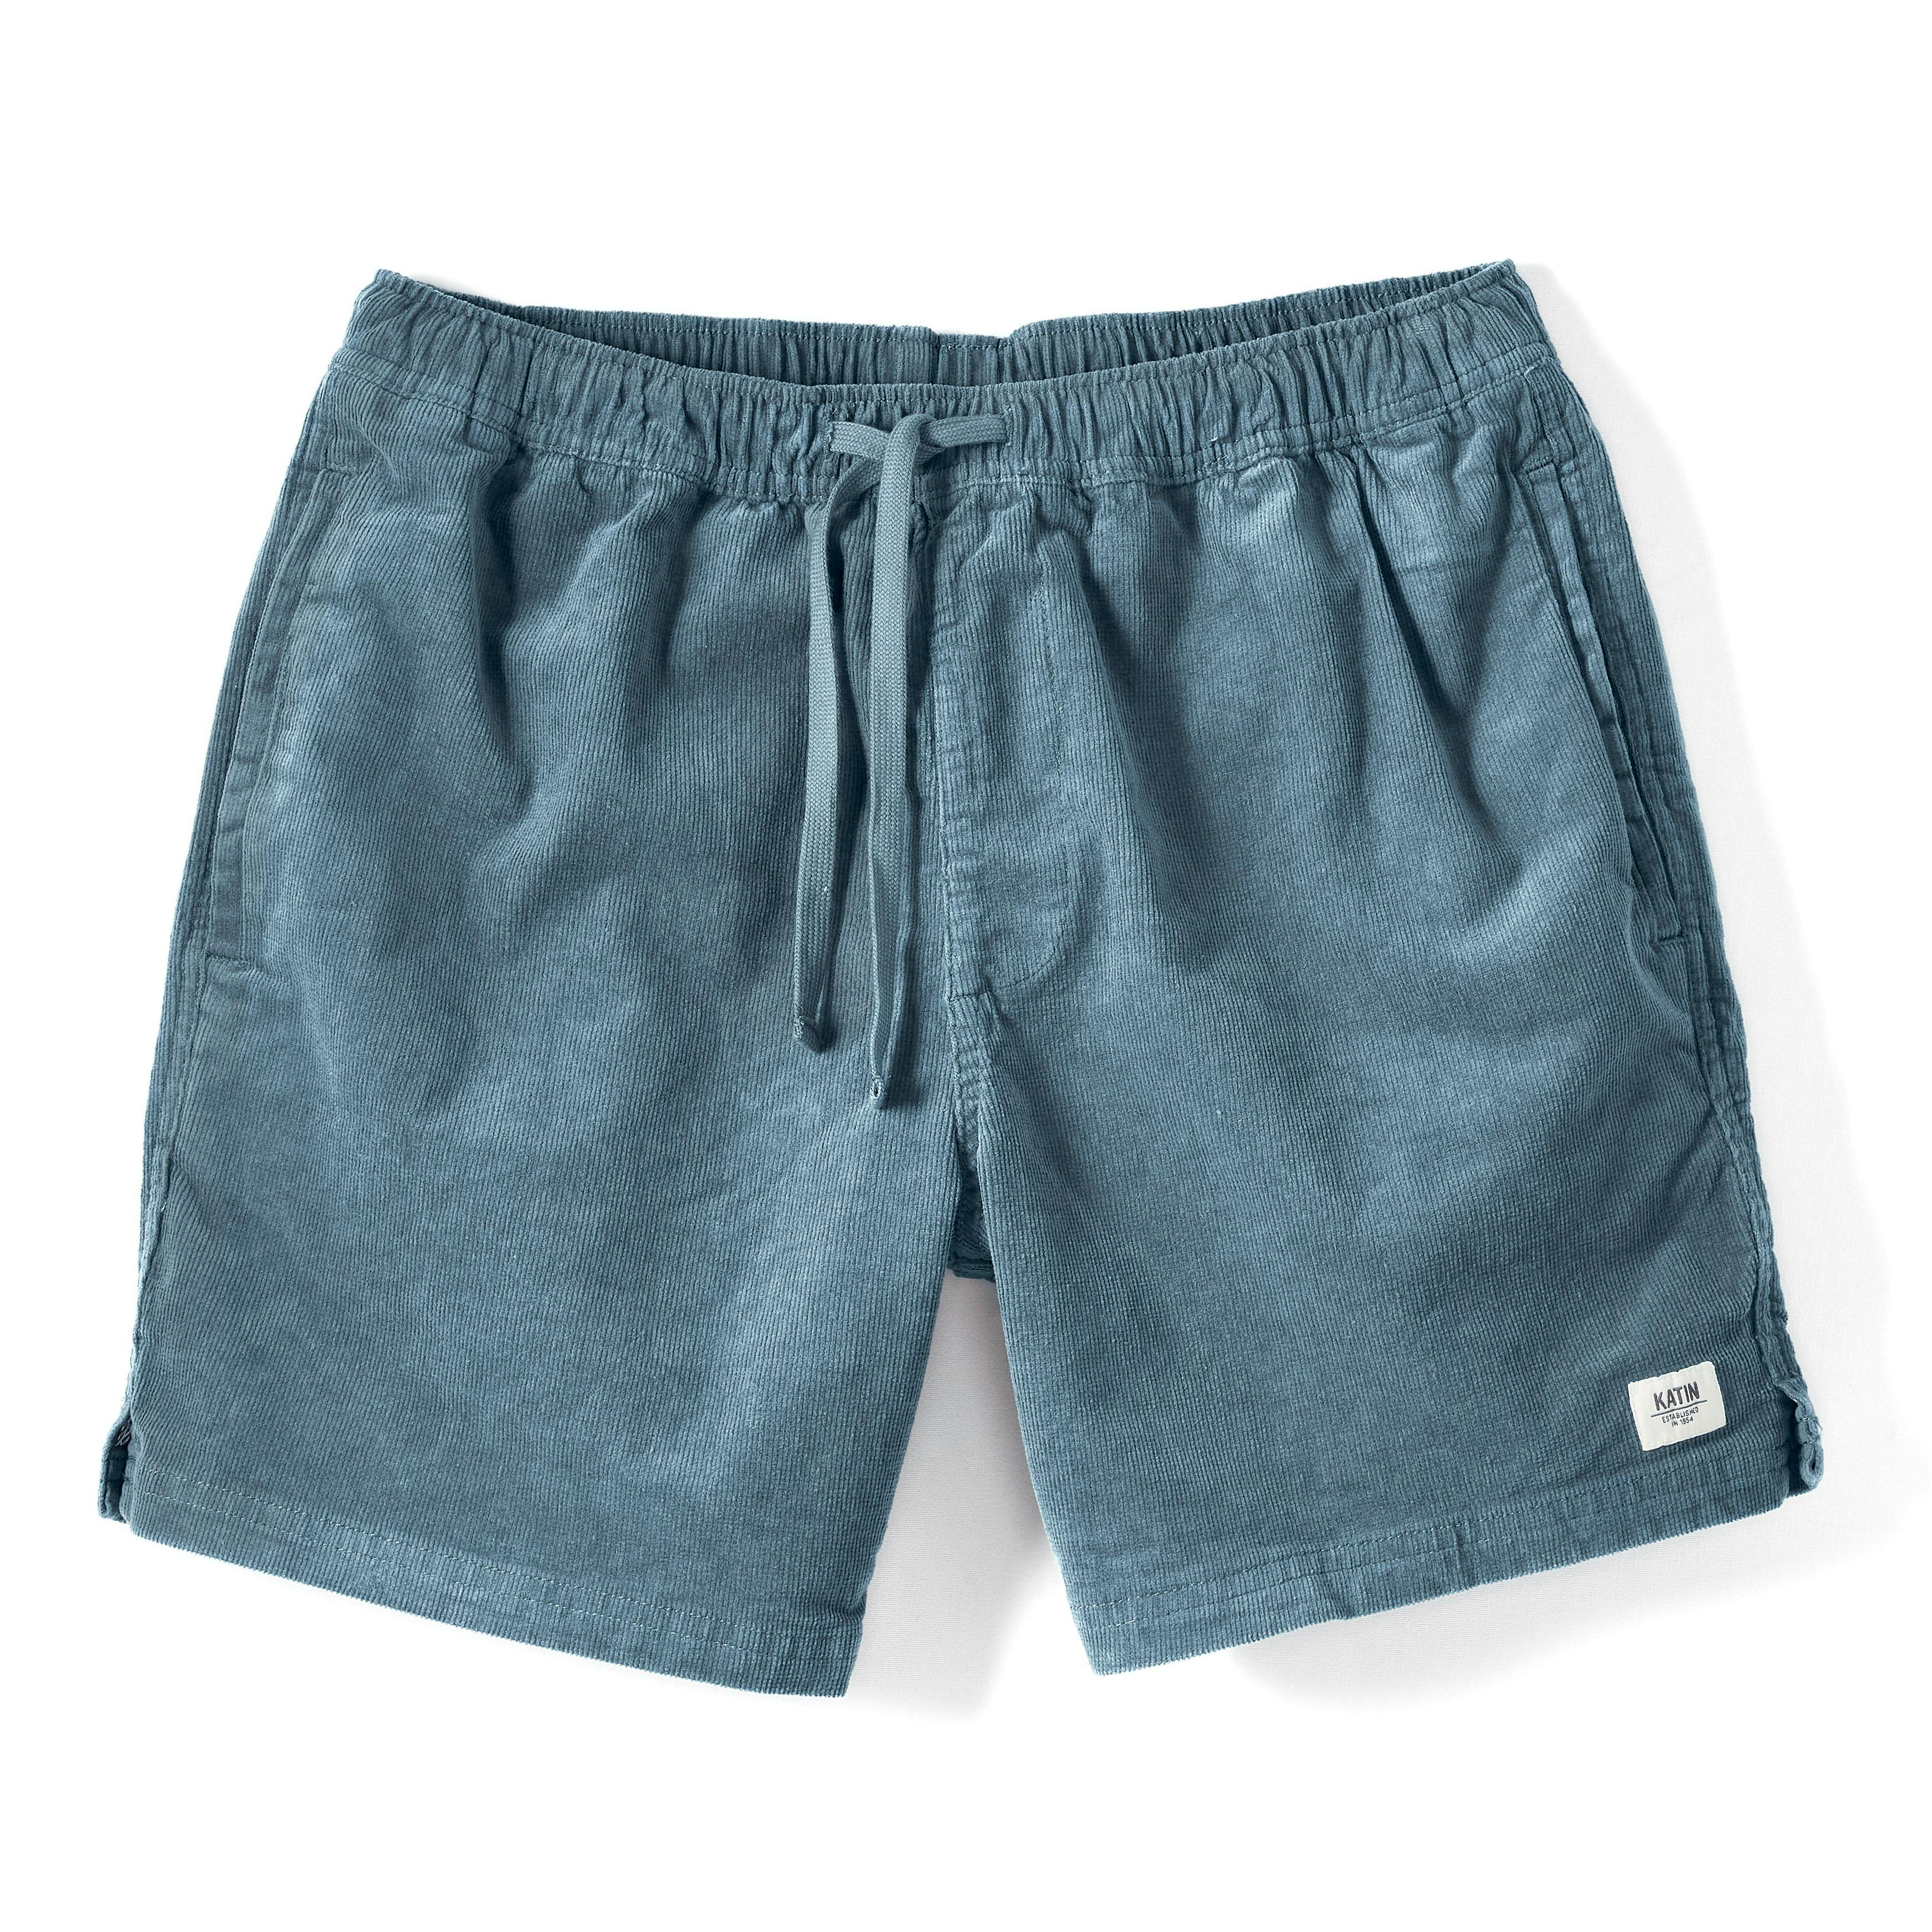 Katin Cord Local Short - 6.5 - Overcast, Casual Shorts